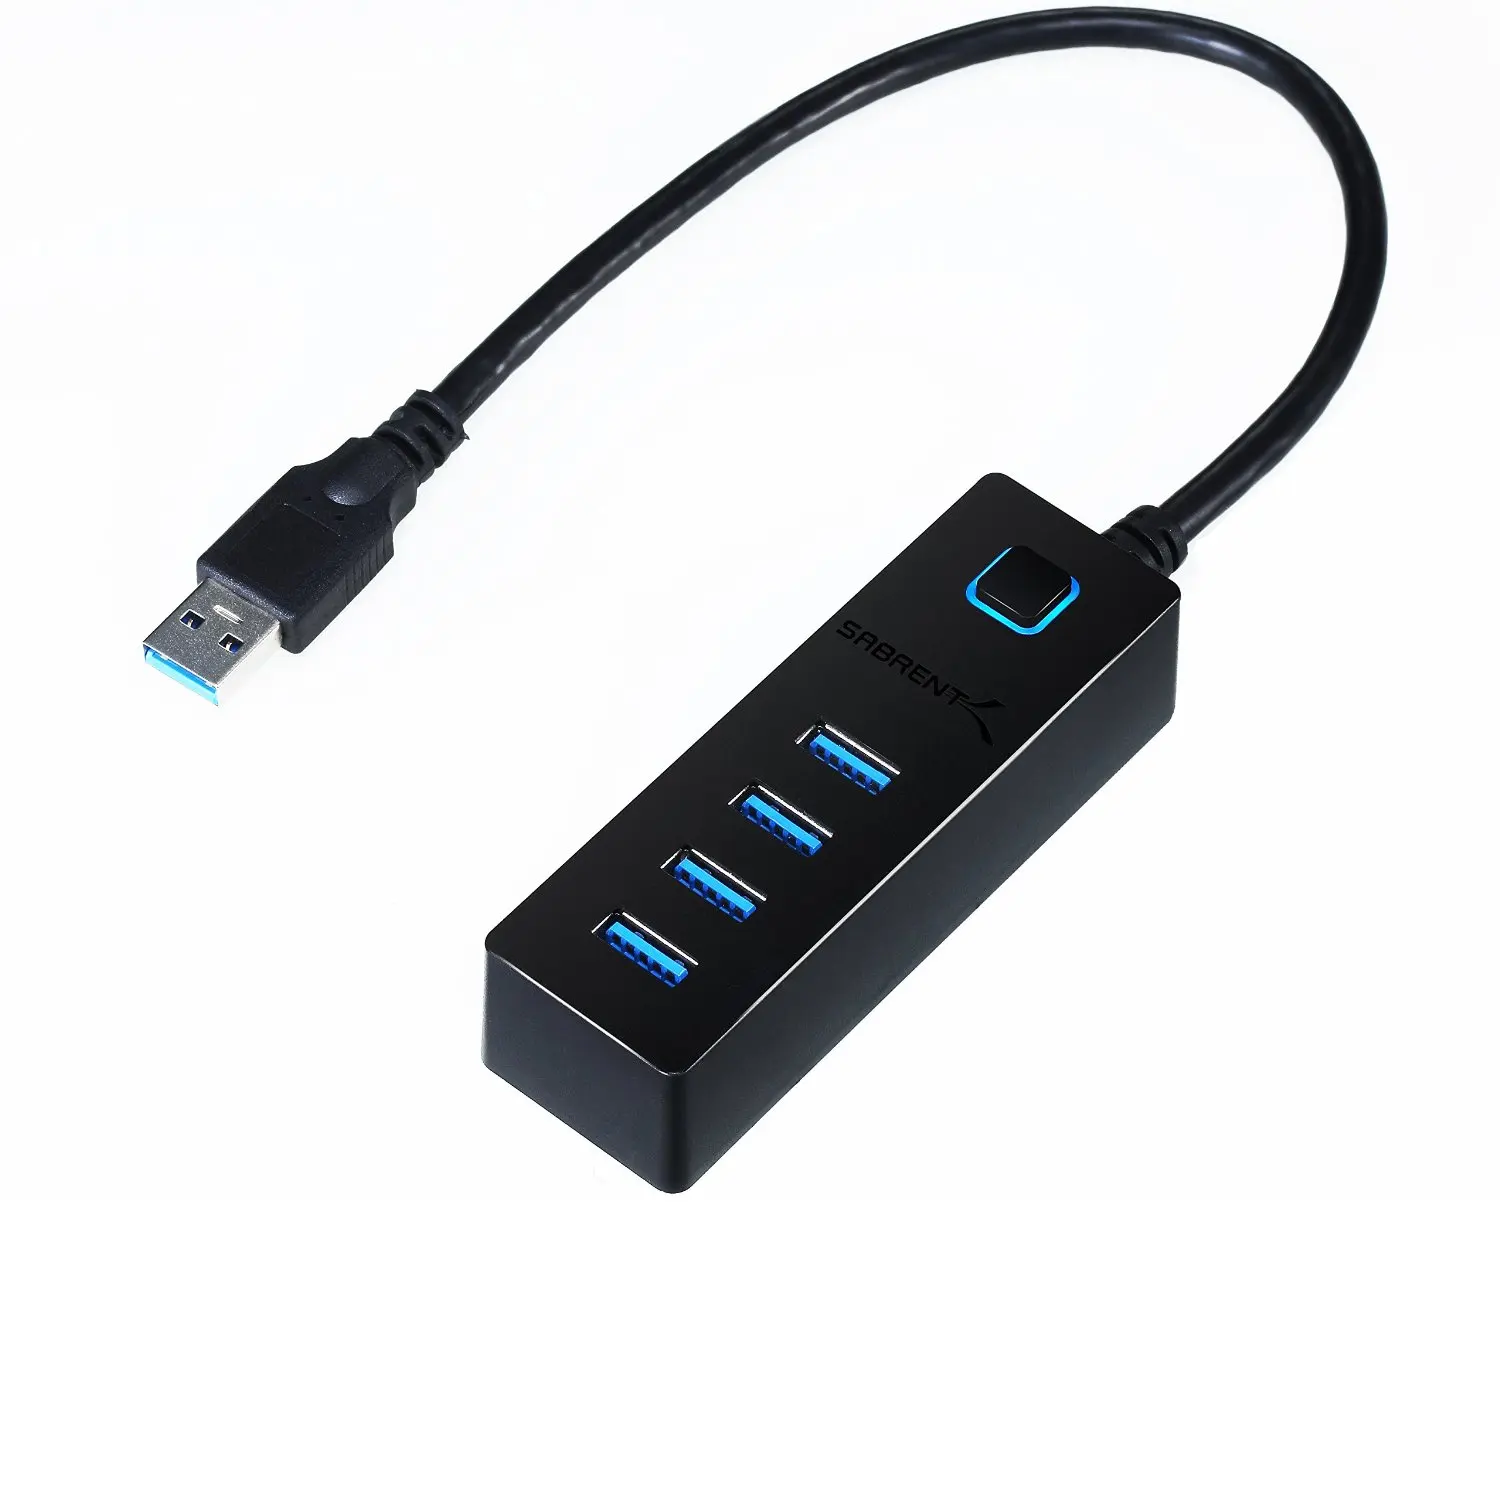 Usb c hub 3.0. USB Hub USB 3.0. Sabrent 4-портовый USB 3.0 концентратор. Dell USB 3.0 Hub. USB3.0 Hub 3-Port.